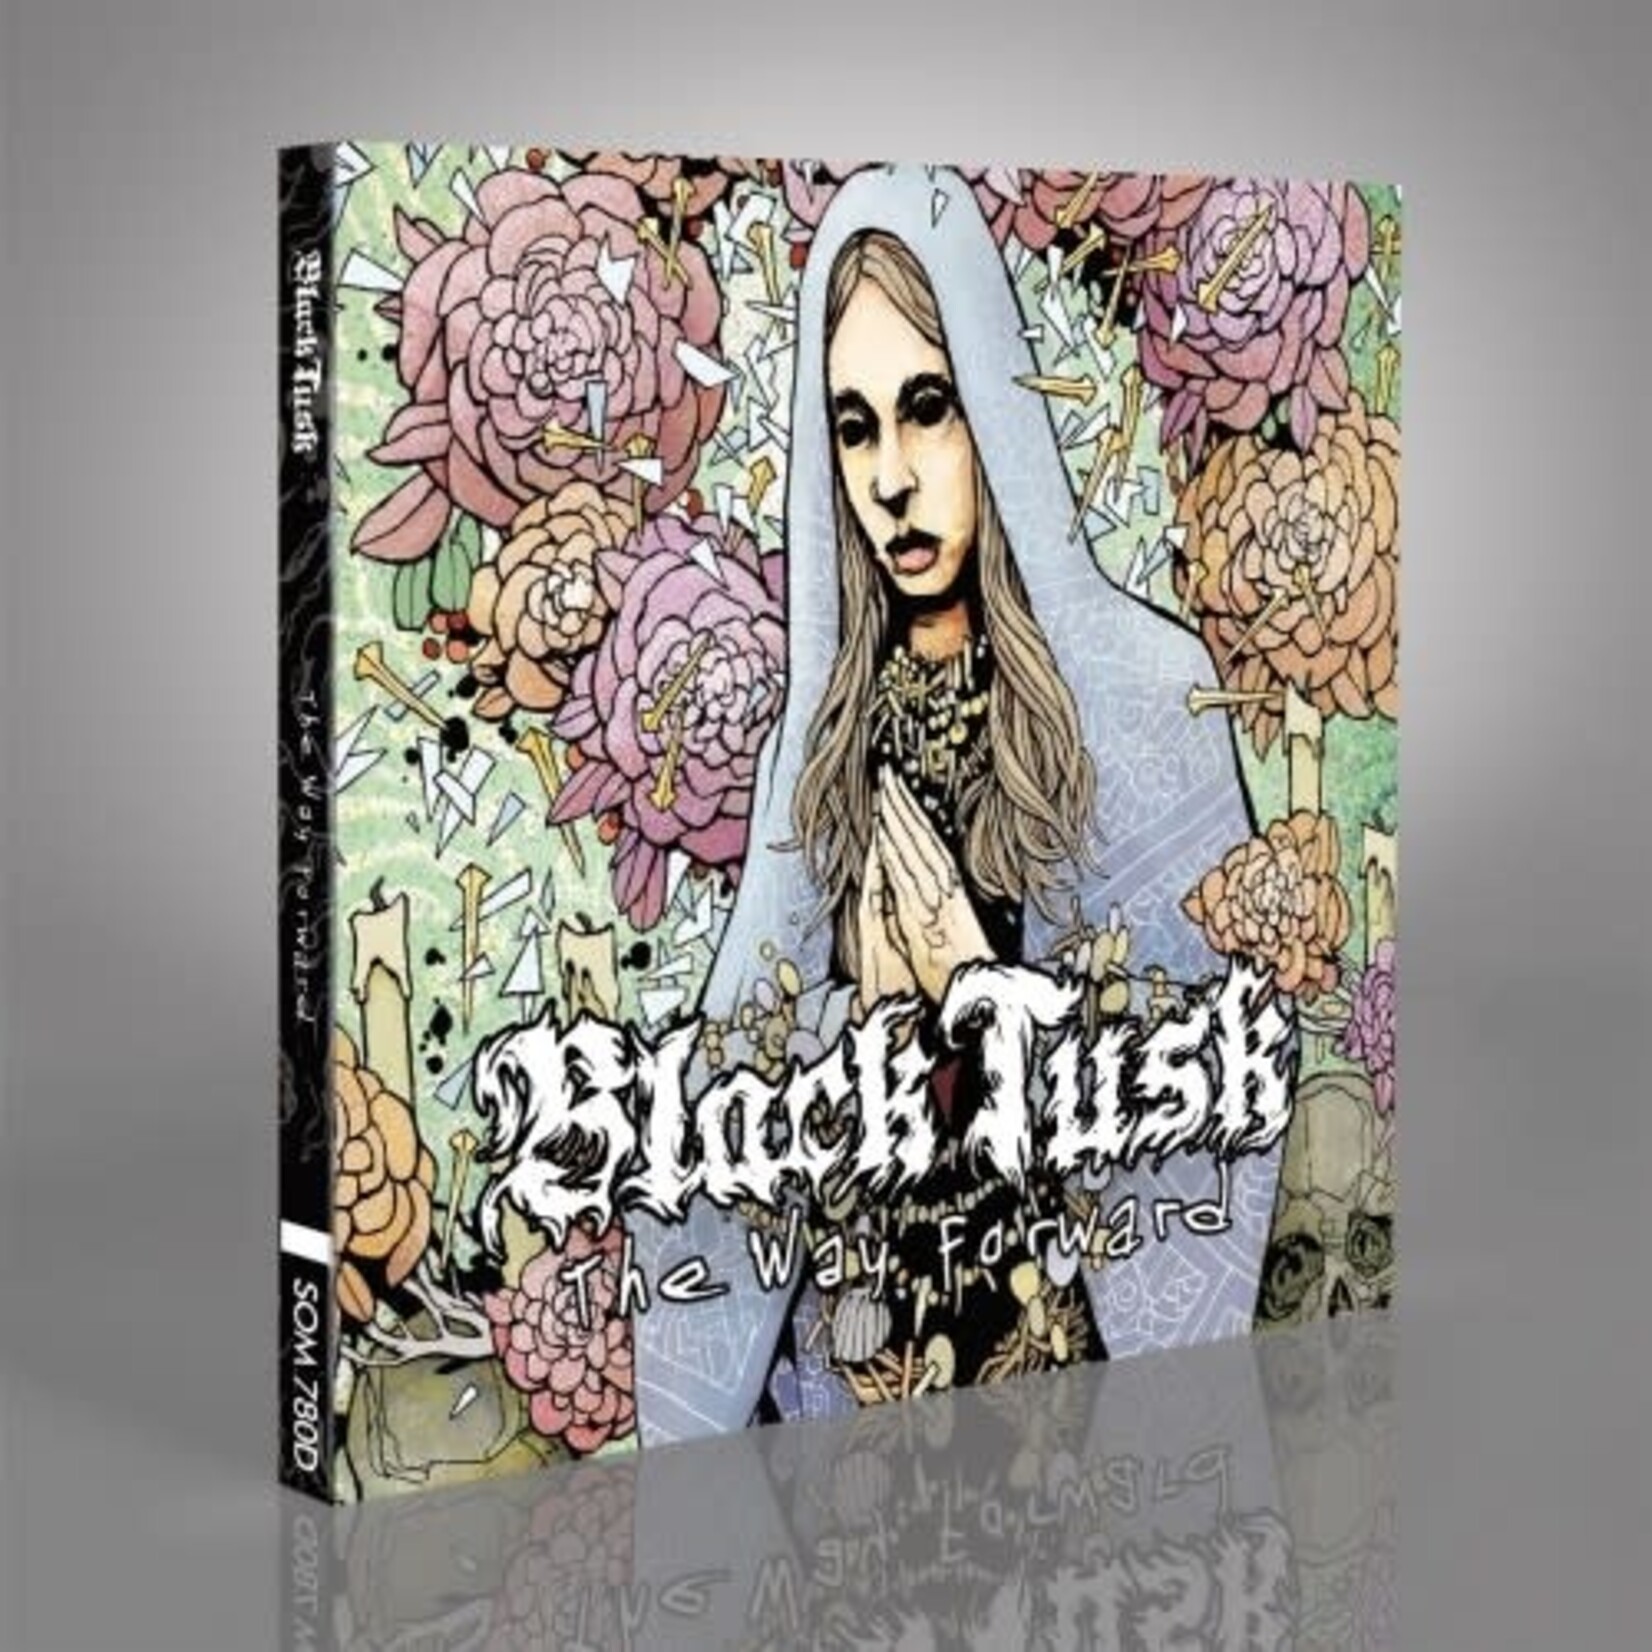 Black Tusk - The Way Forward [CD]